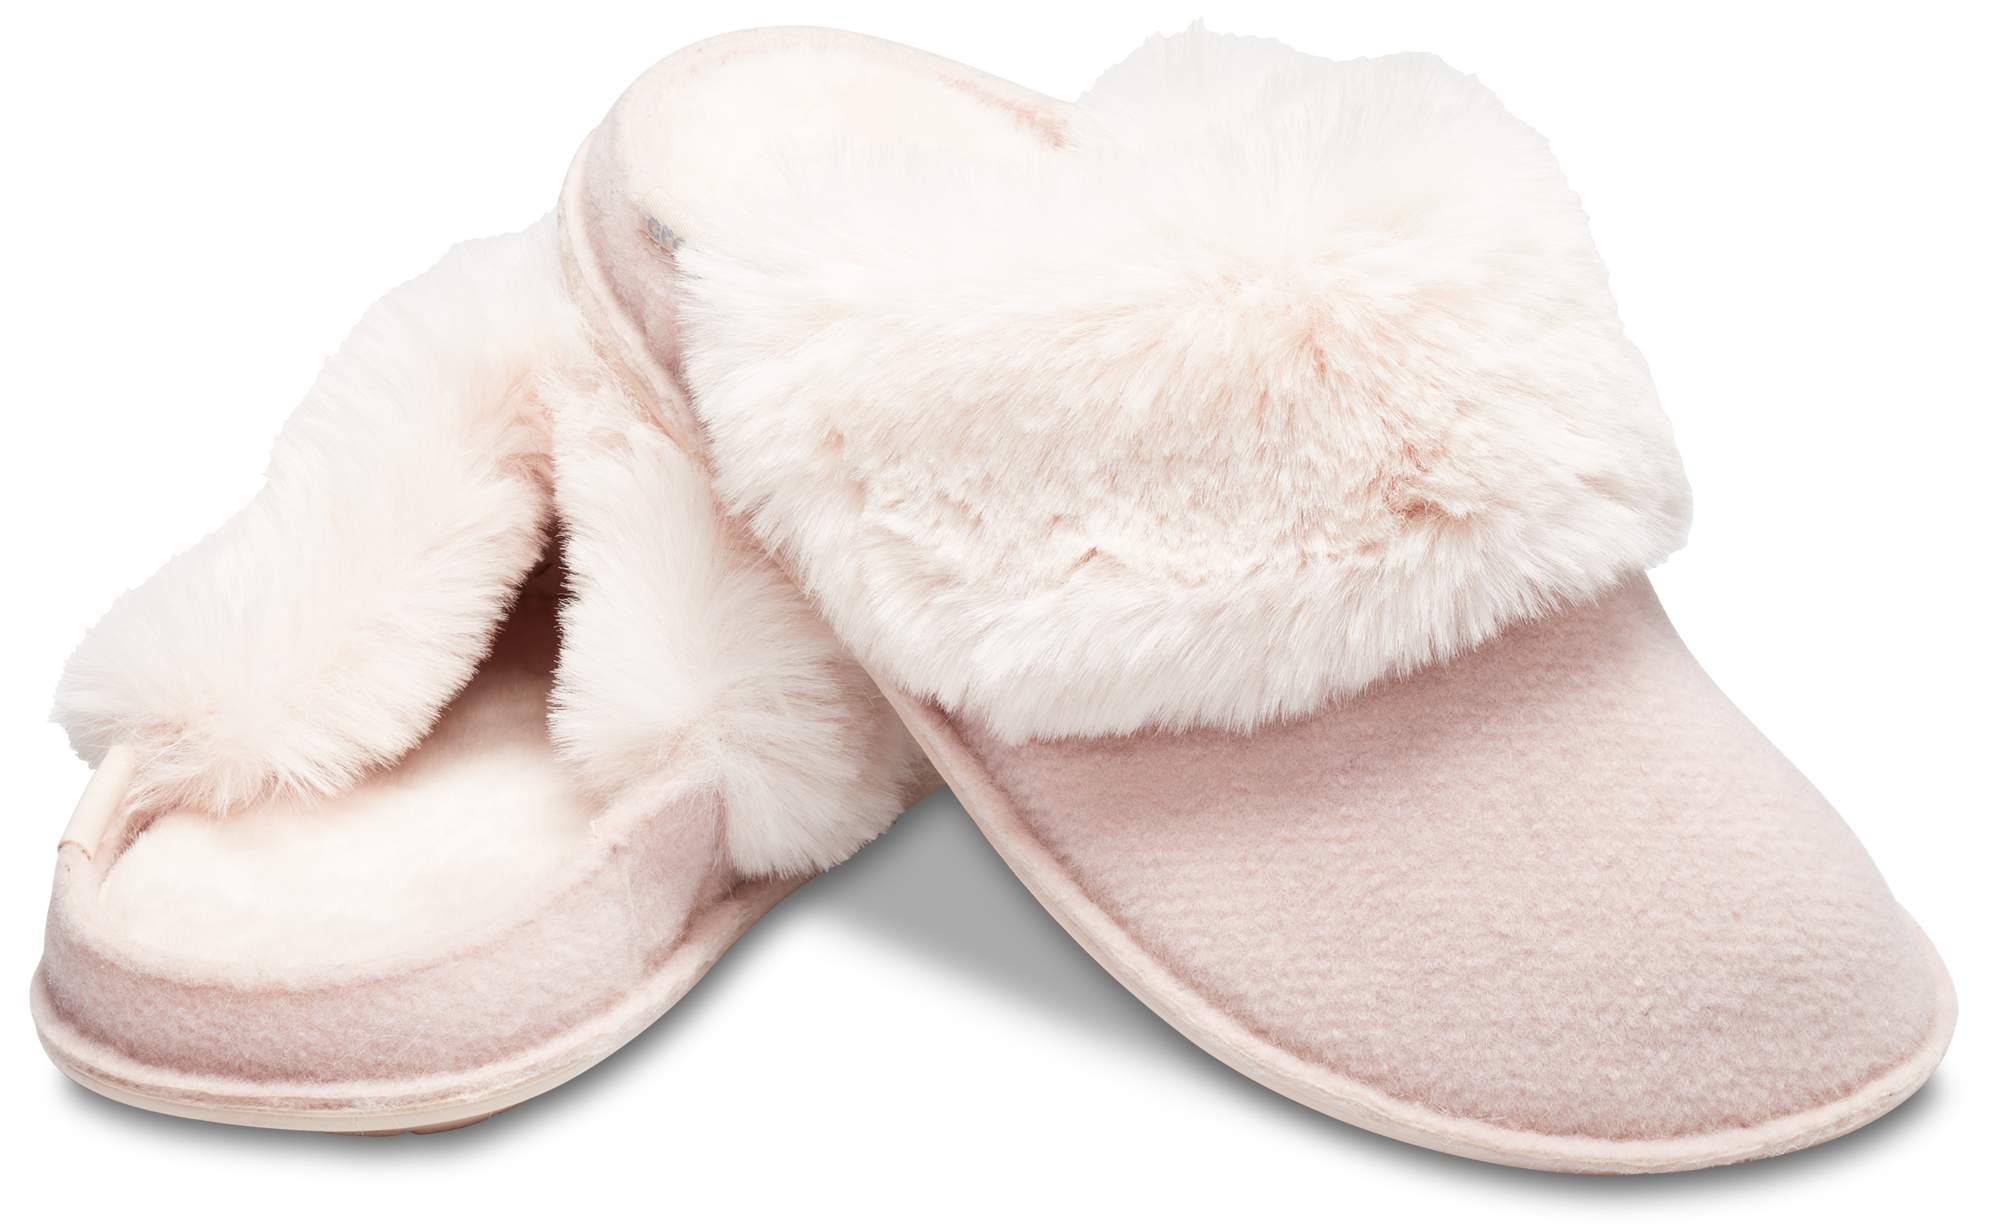 classic lined slipper